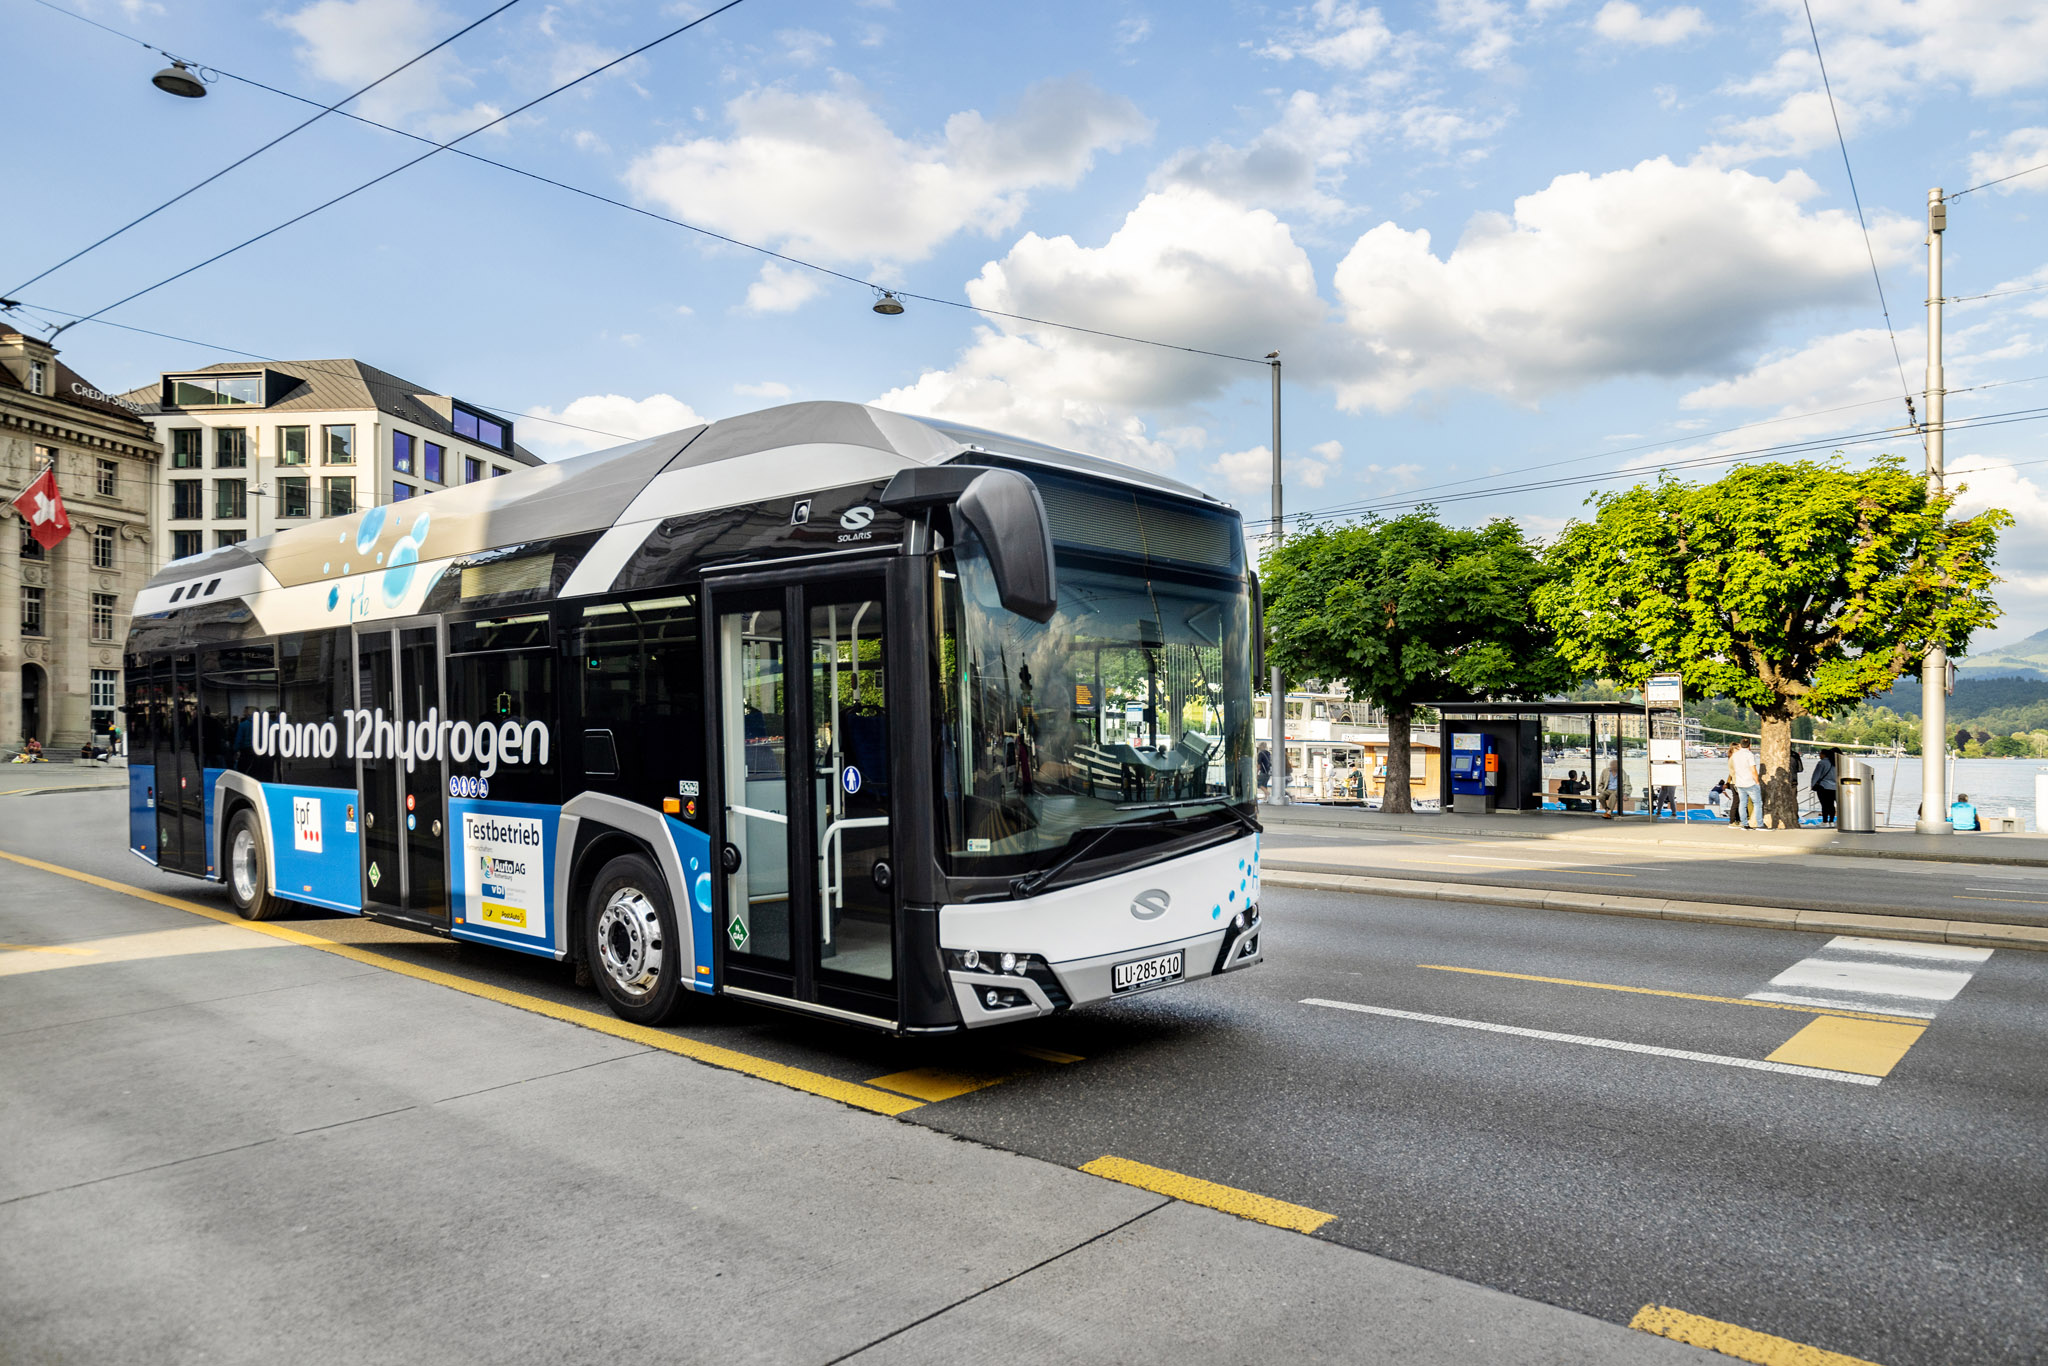 Poland’s Bus Fleet is Turning to Hydrogen